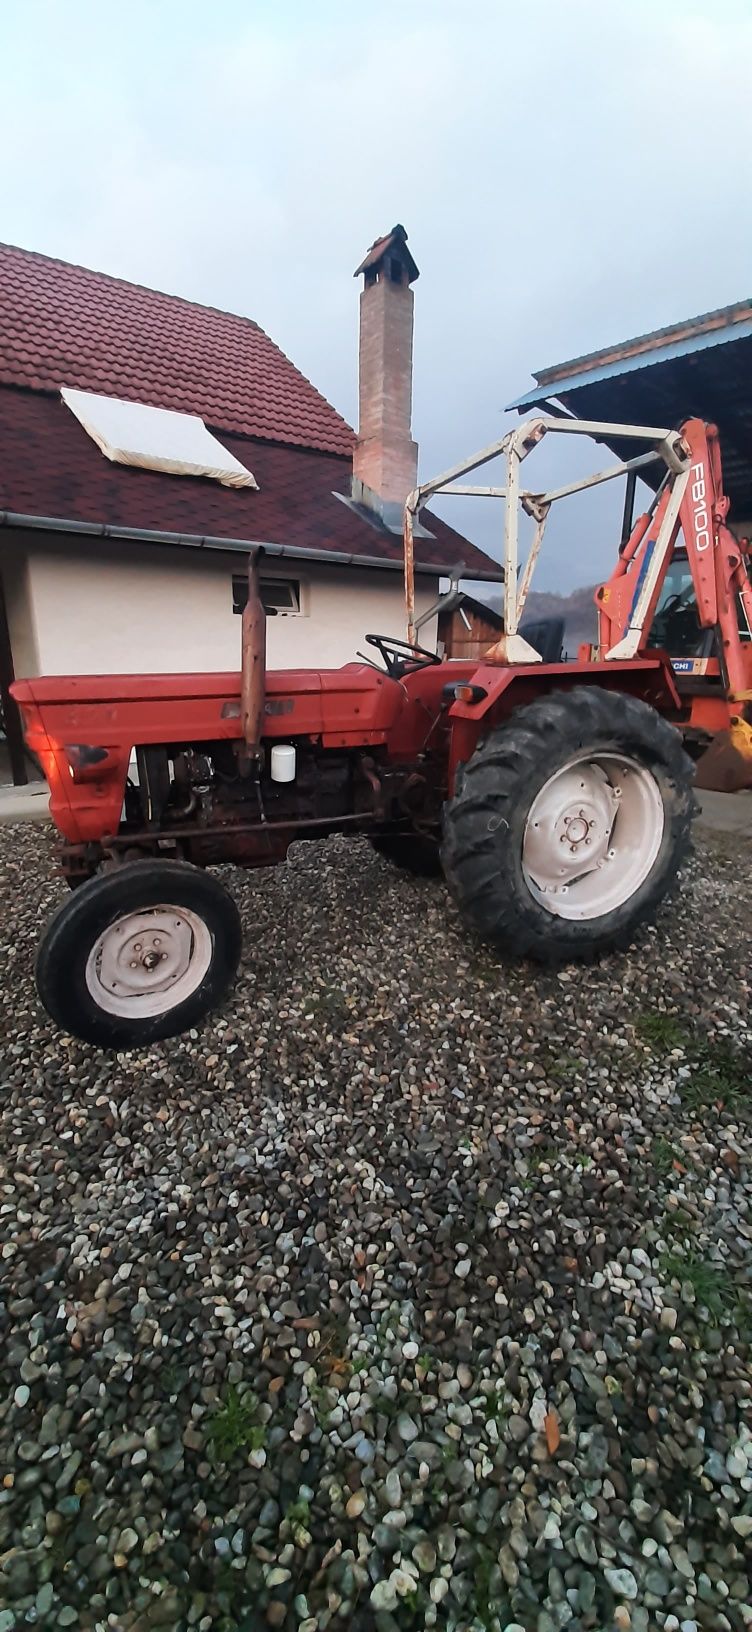 Tractor Fiat 420